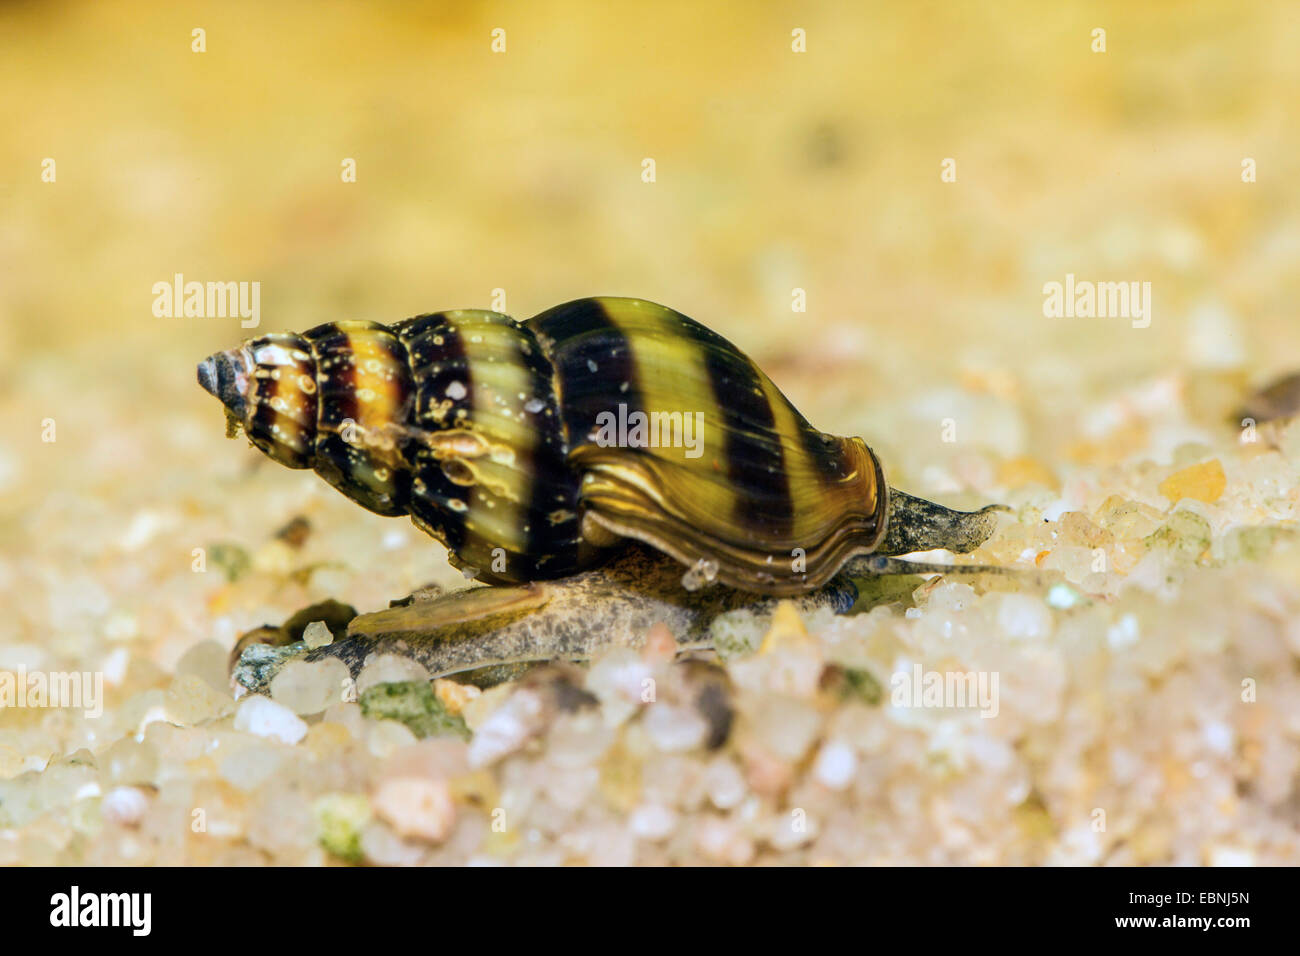 Whelk (Anentome helena), creeping over sandy ground Stock Photo